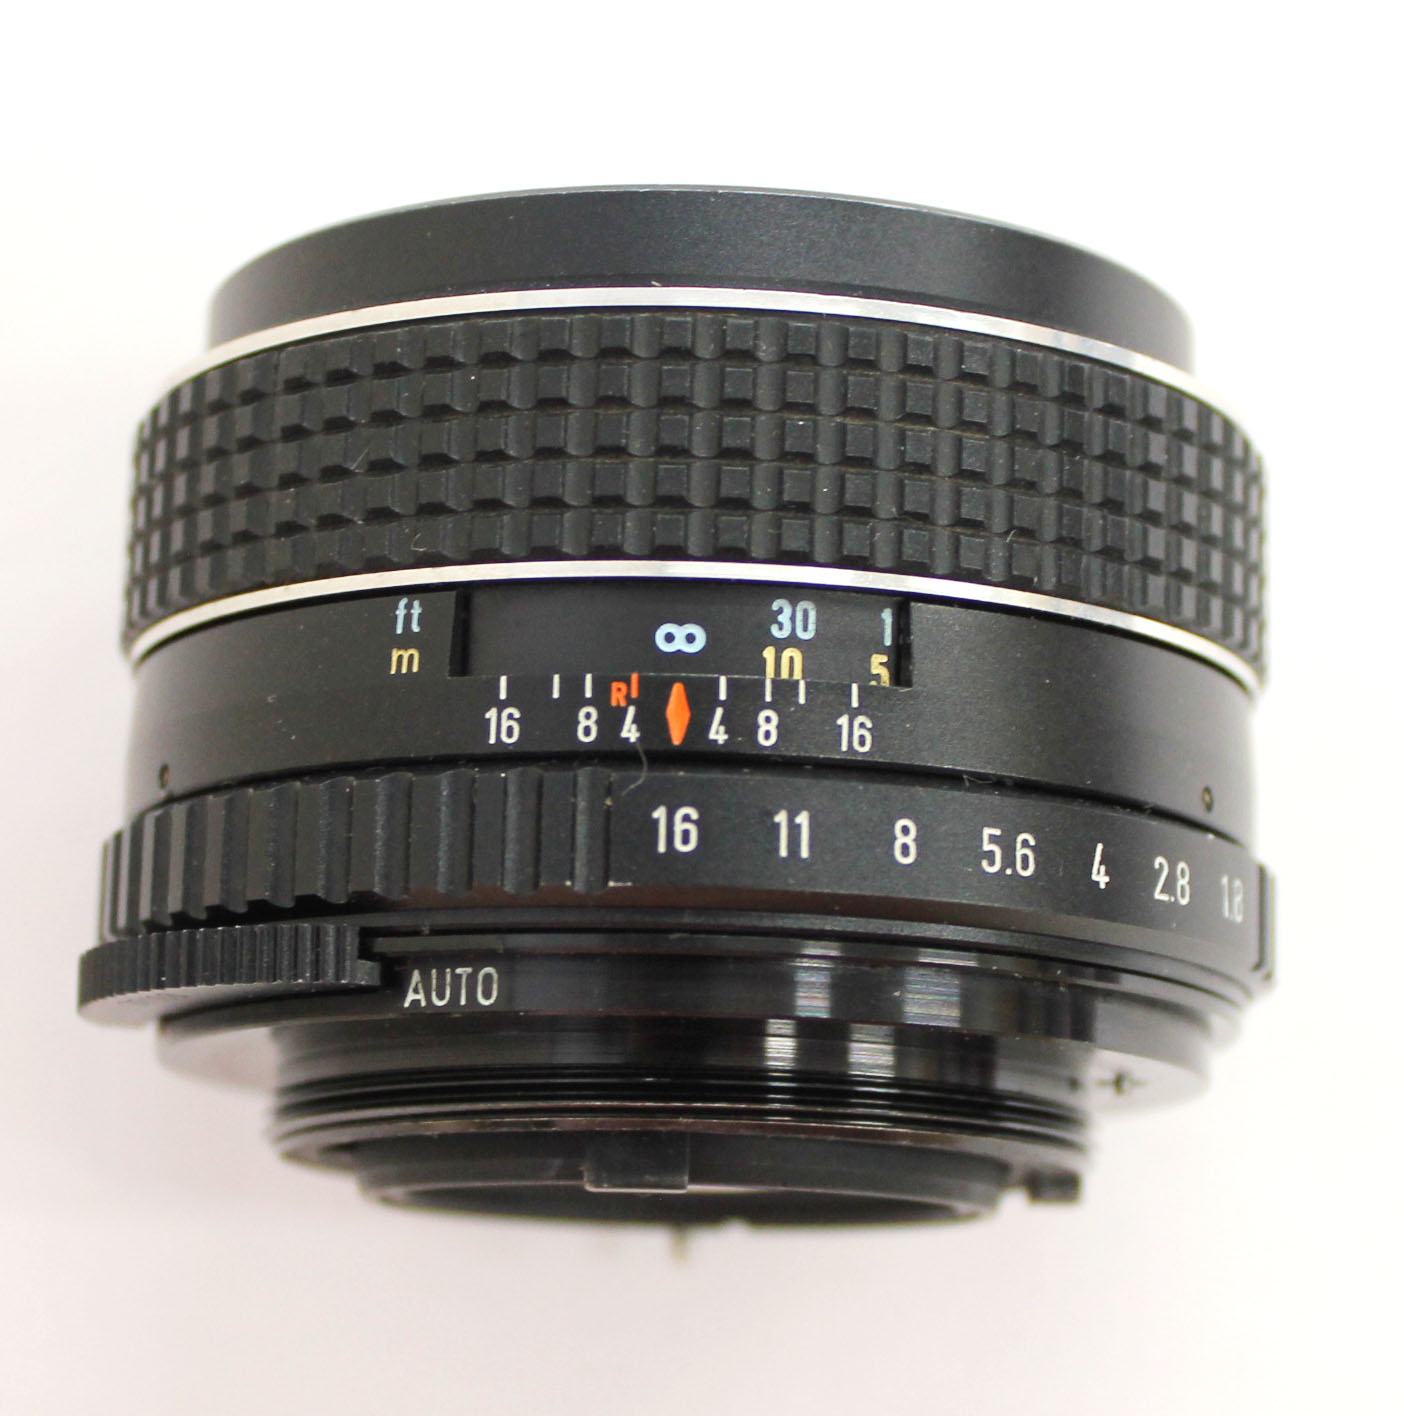 Asahi Pentax Spotmatic F SPF 35mm SLR Camera w/ SMC Takumar 55mm F/1.8 Lens from Japan Photo 14